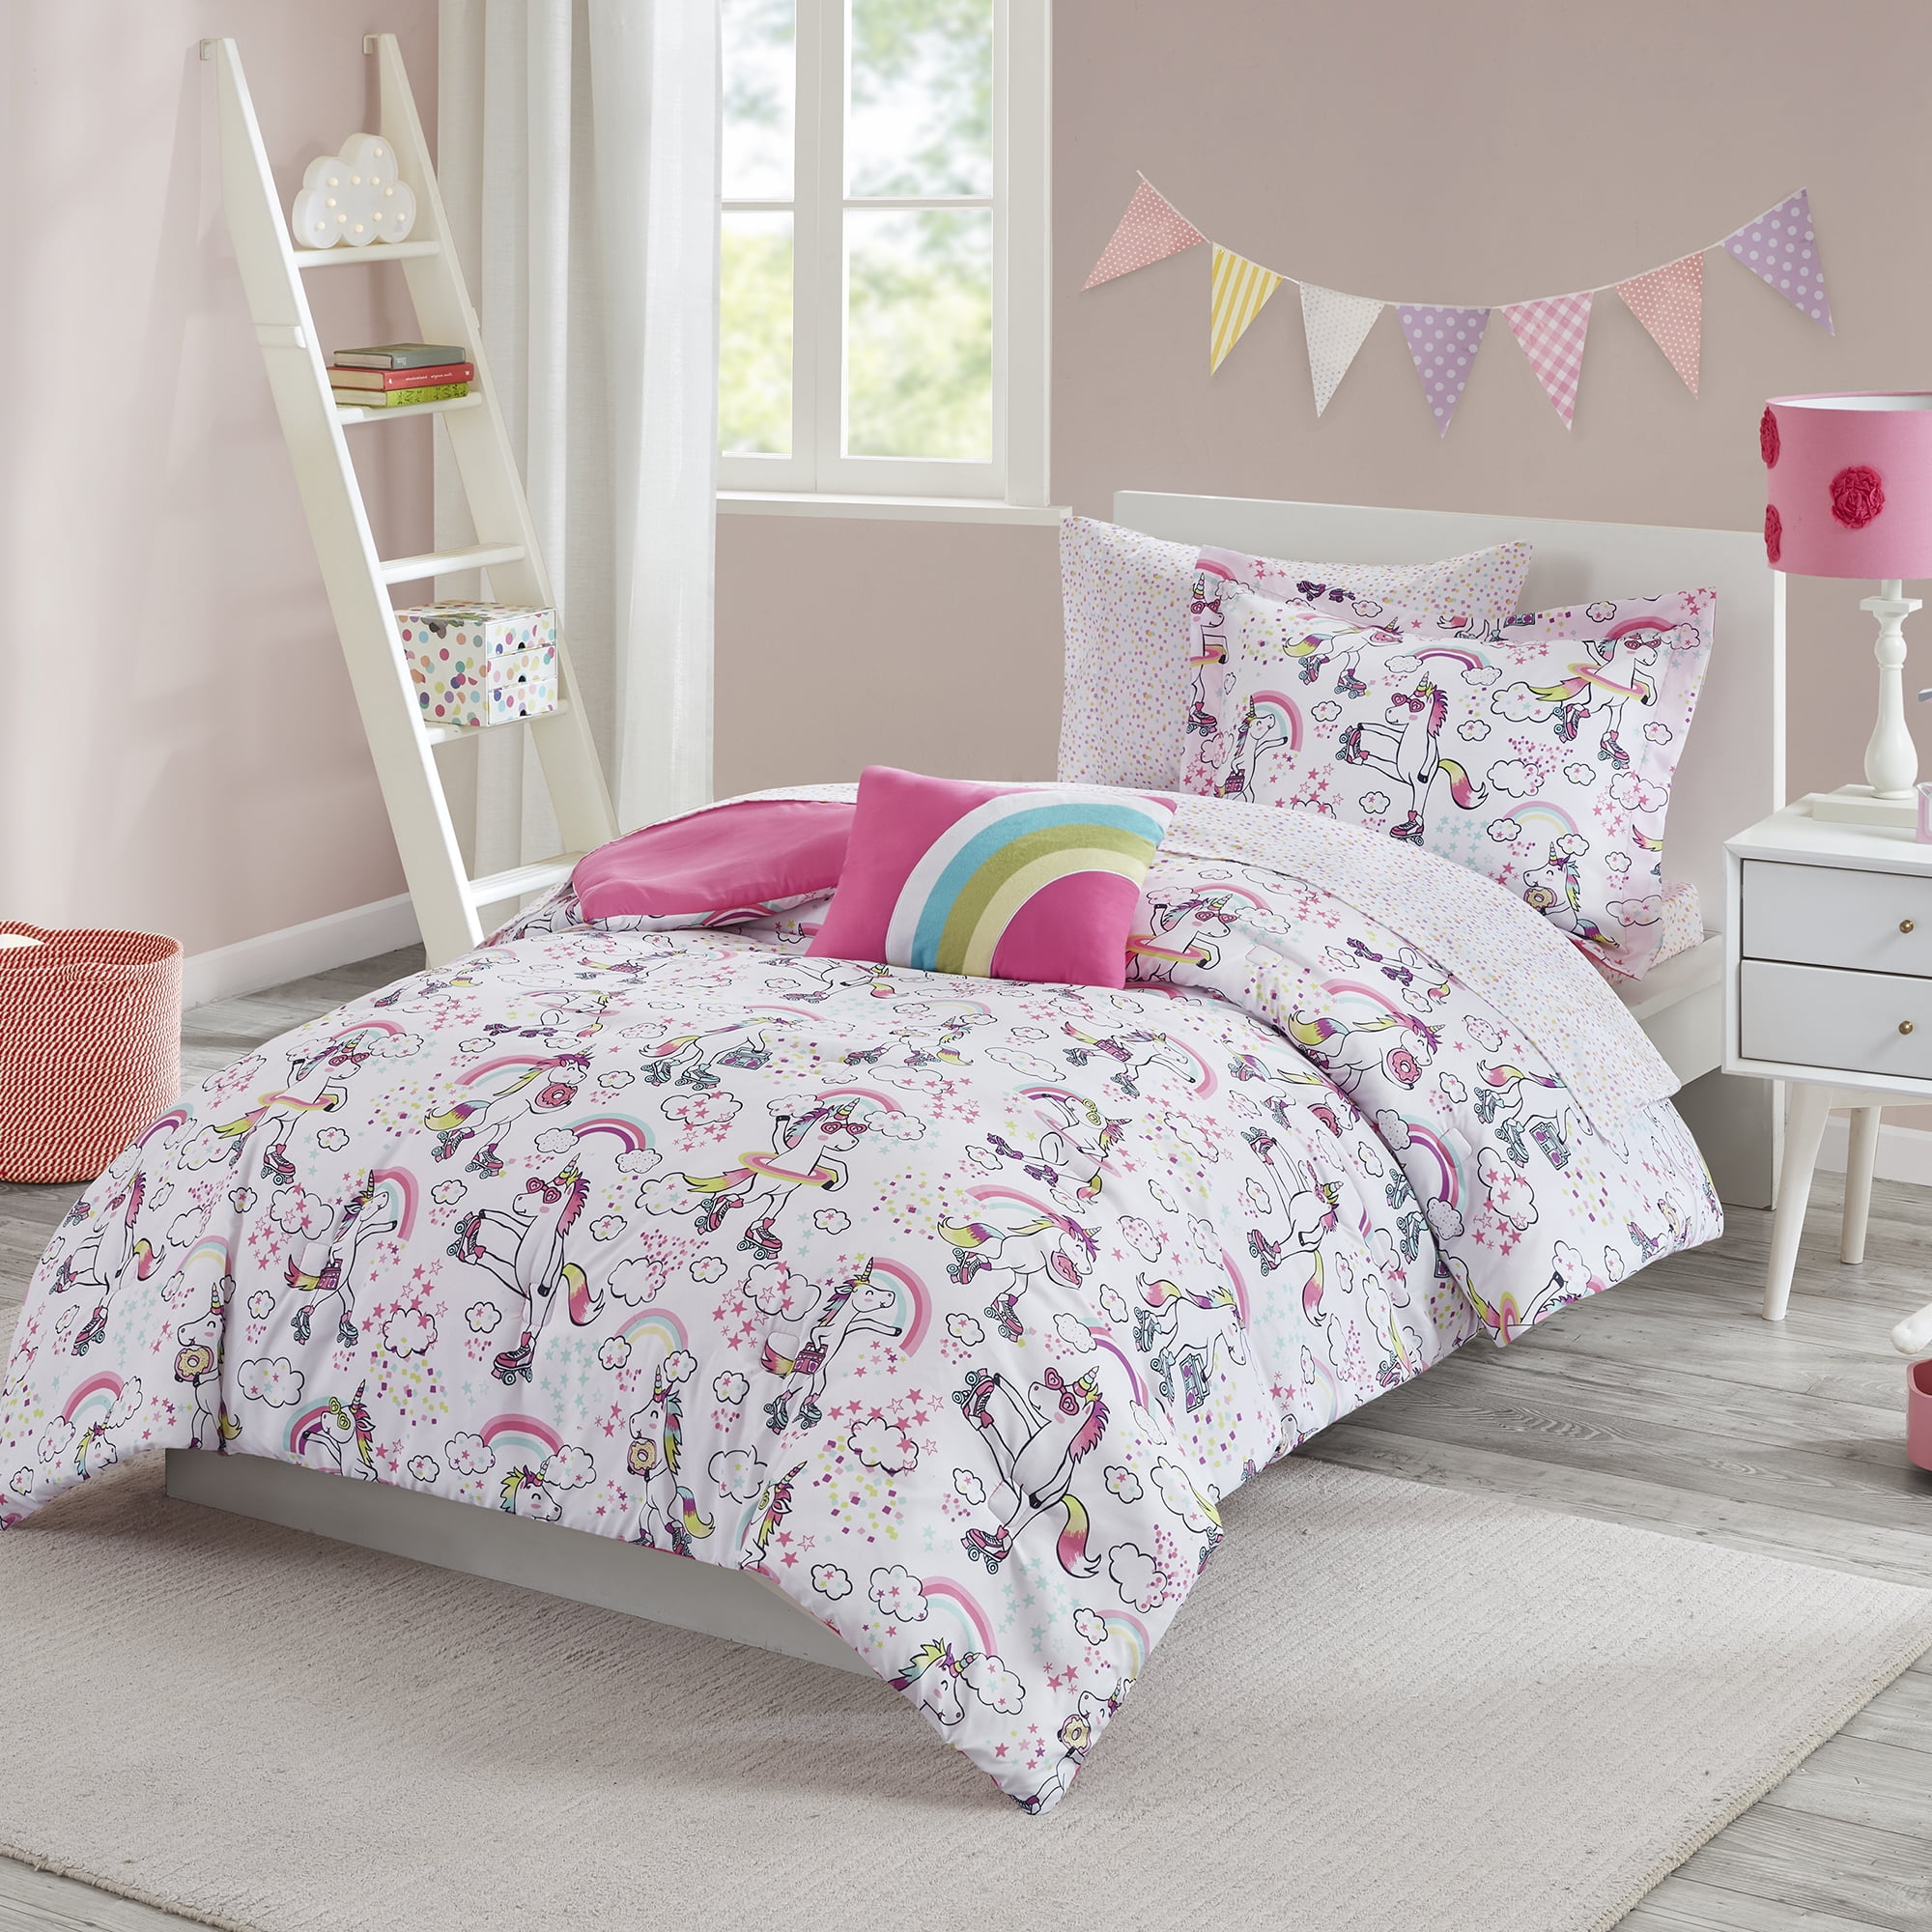 Kidz Mix Unicorn Rainbow Bed in a Bag Kids Bedding Set w/ Reversible Comforter 